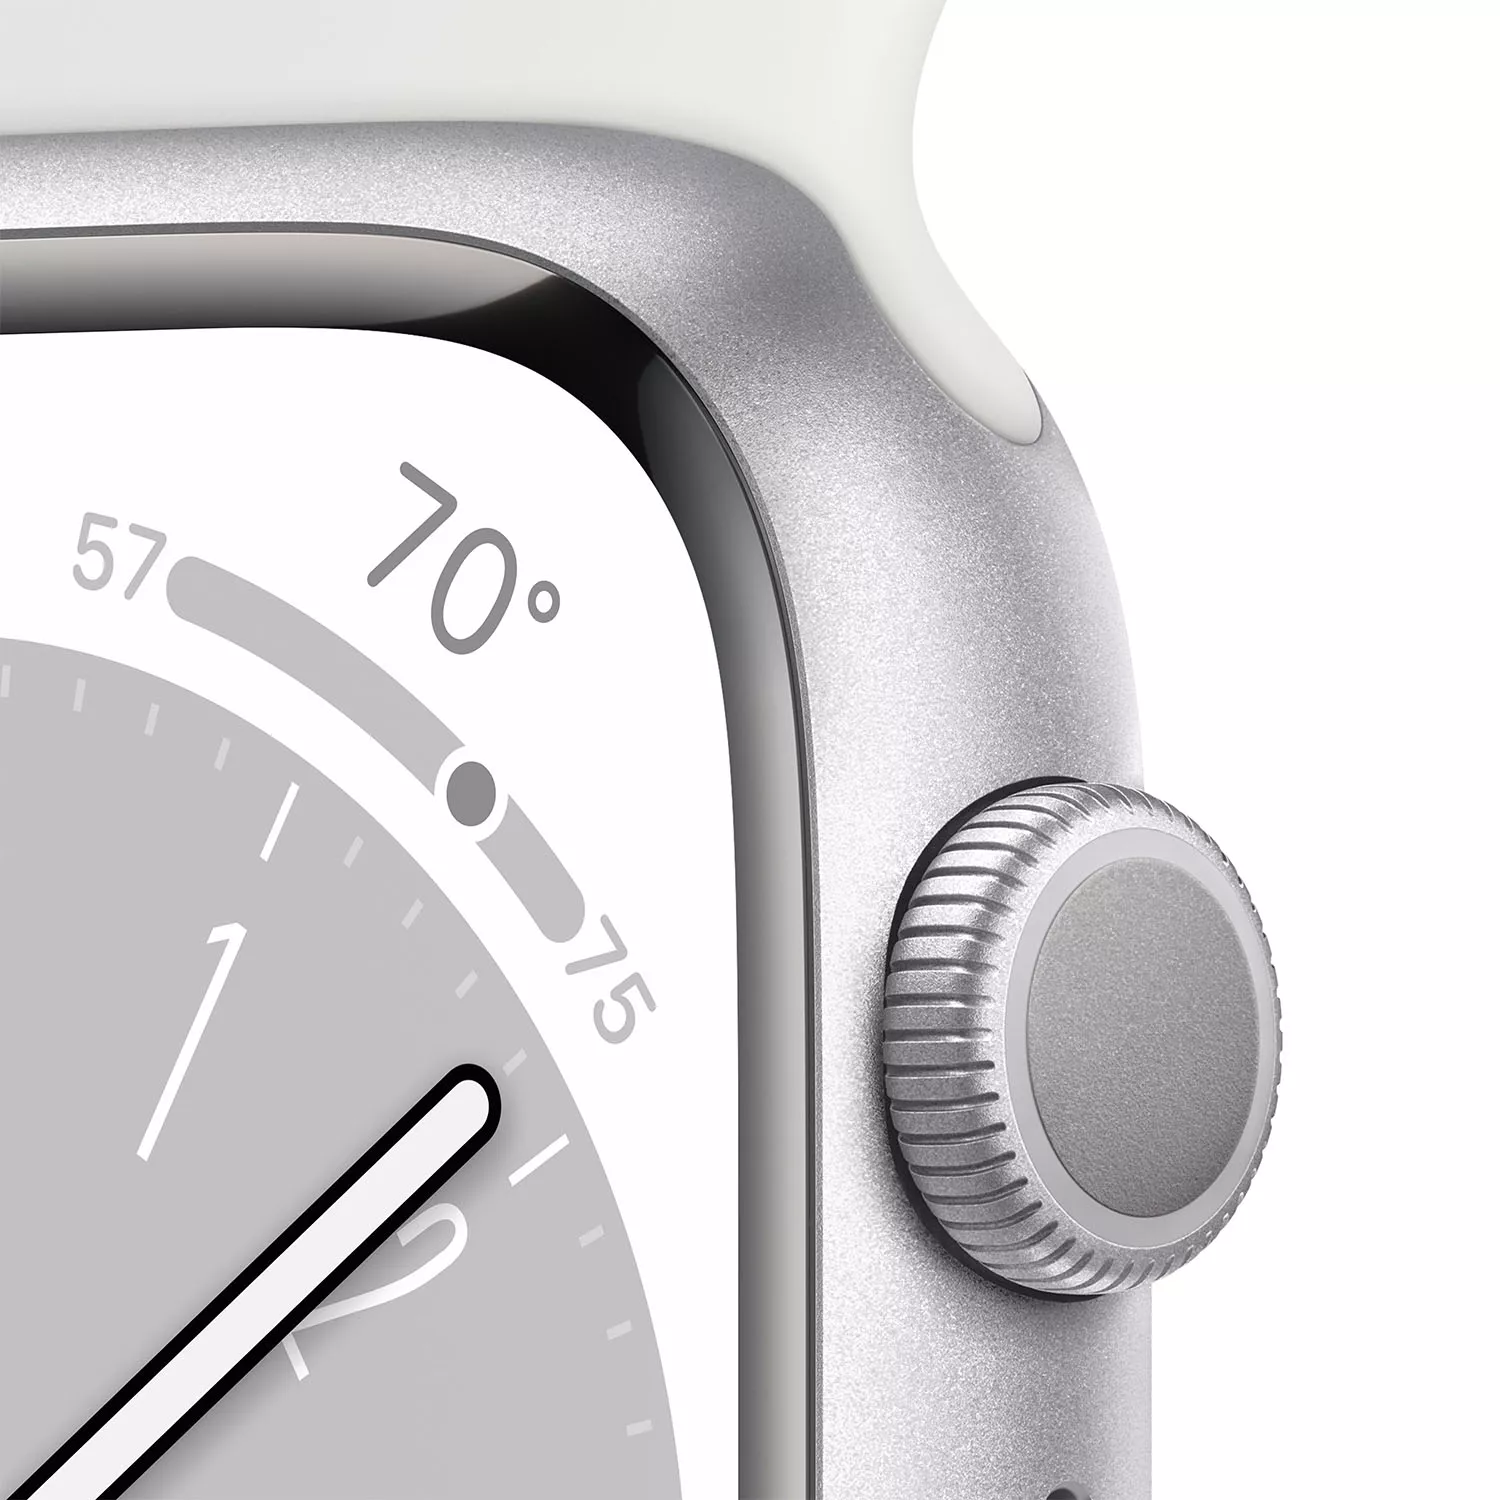 Apple Watch Series 8 45mm, серебристый алюминий, спортивный ремешок белого цвета